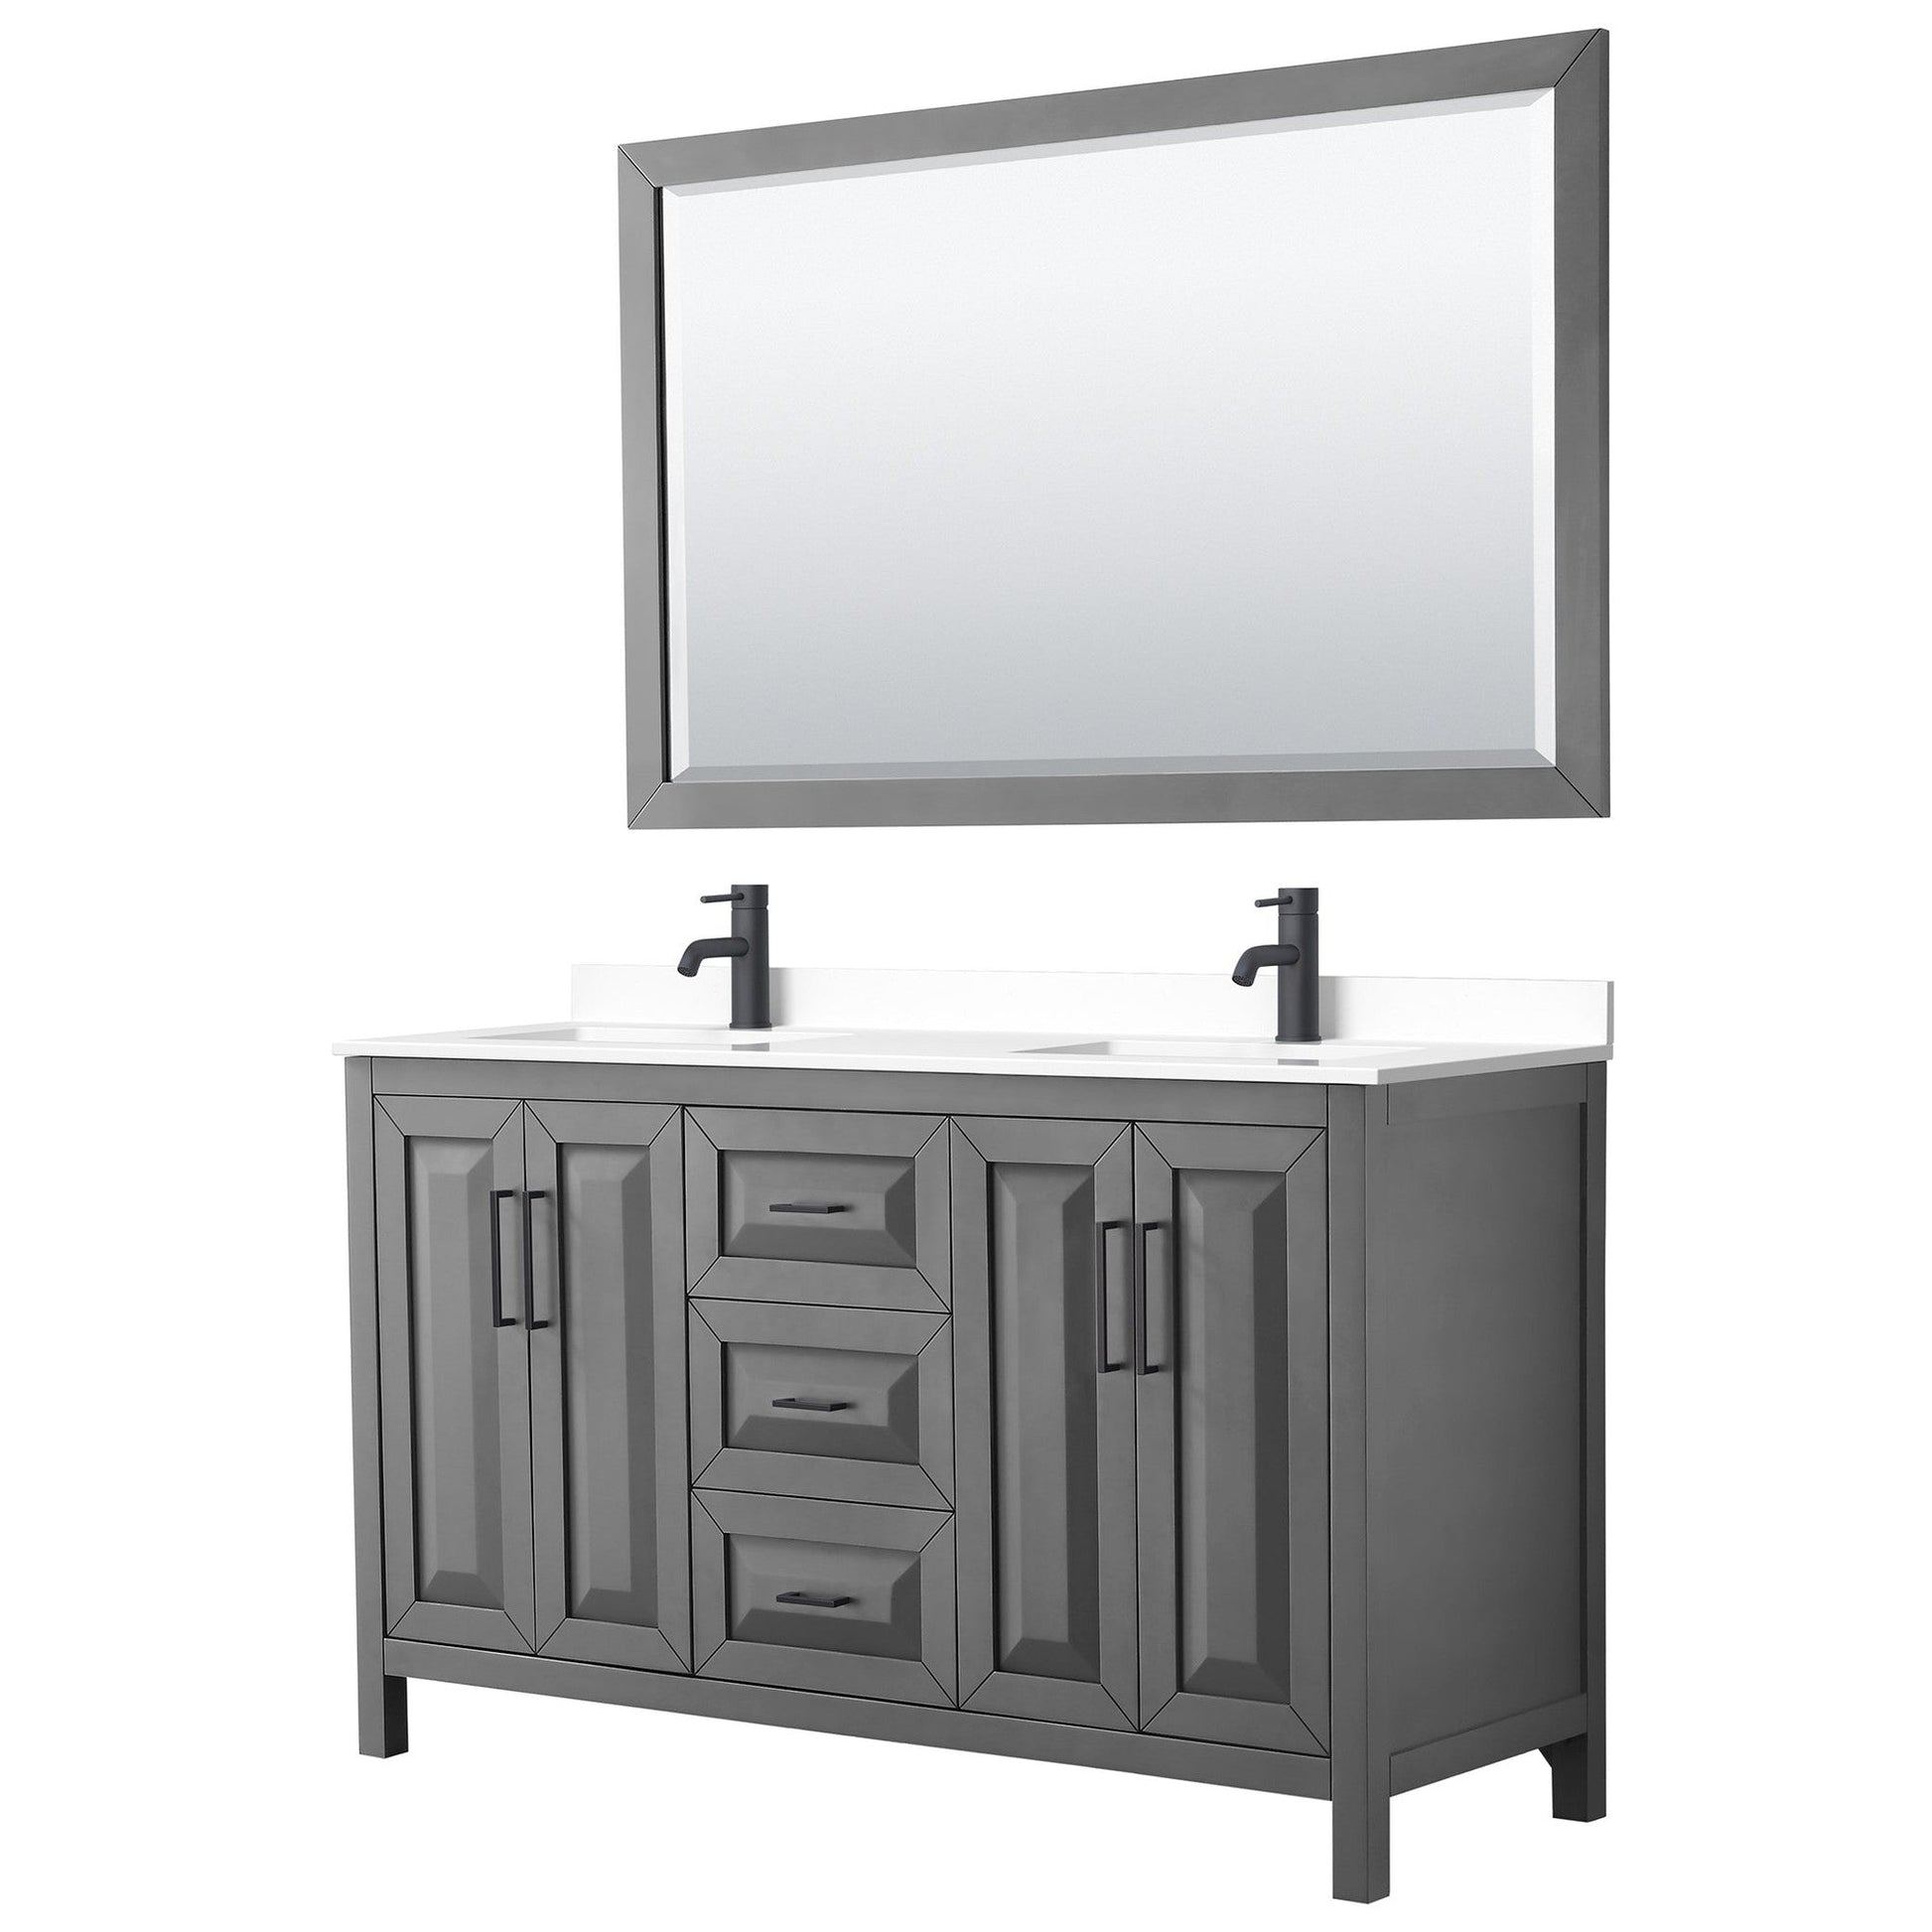 Daria 60" Double Bathroom Vanity in Dark Gray, White Cultured Marble Countertop, Undermount Square Sinks, Matte Black Trim, 58" Mirror